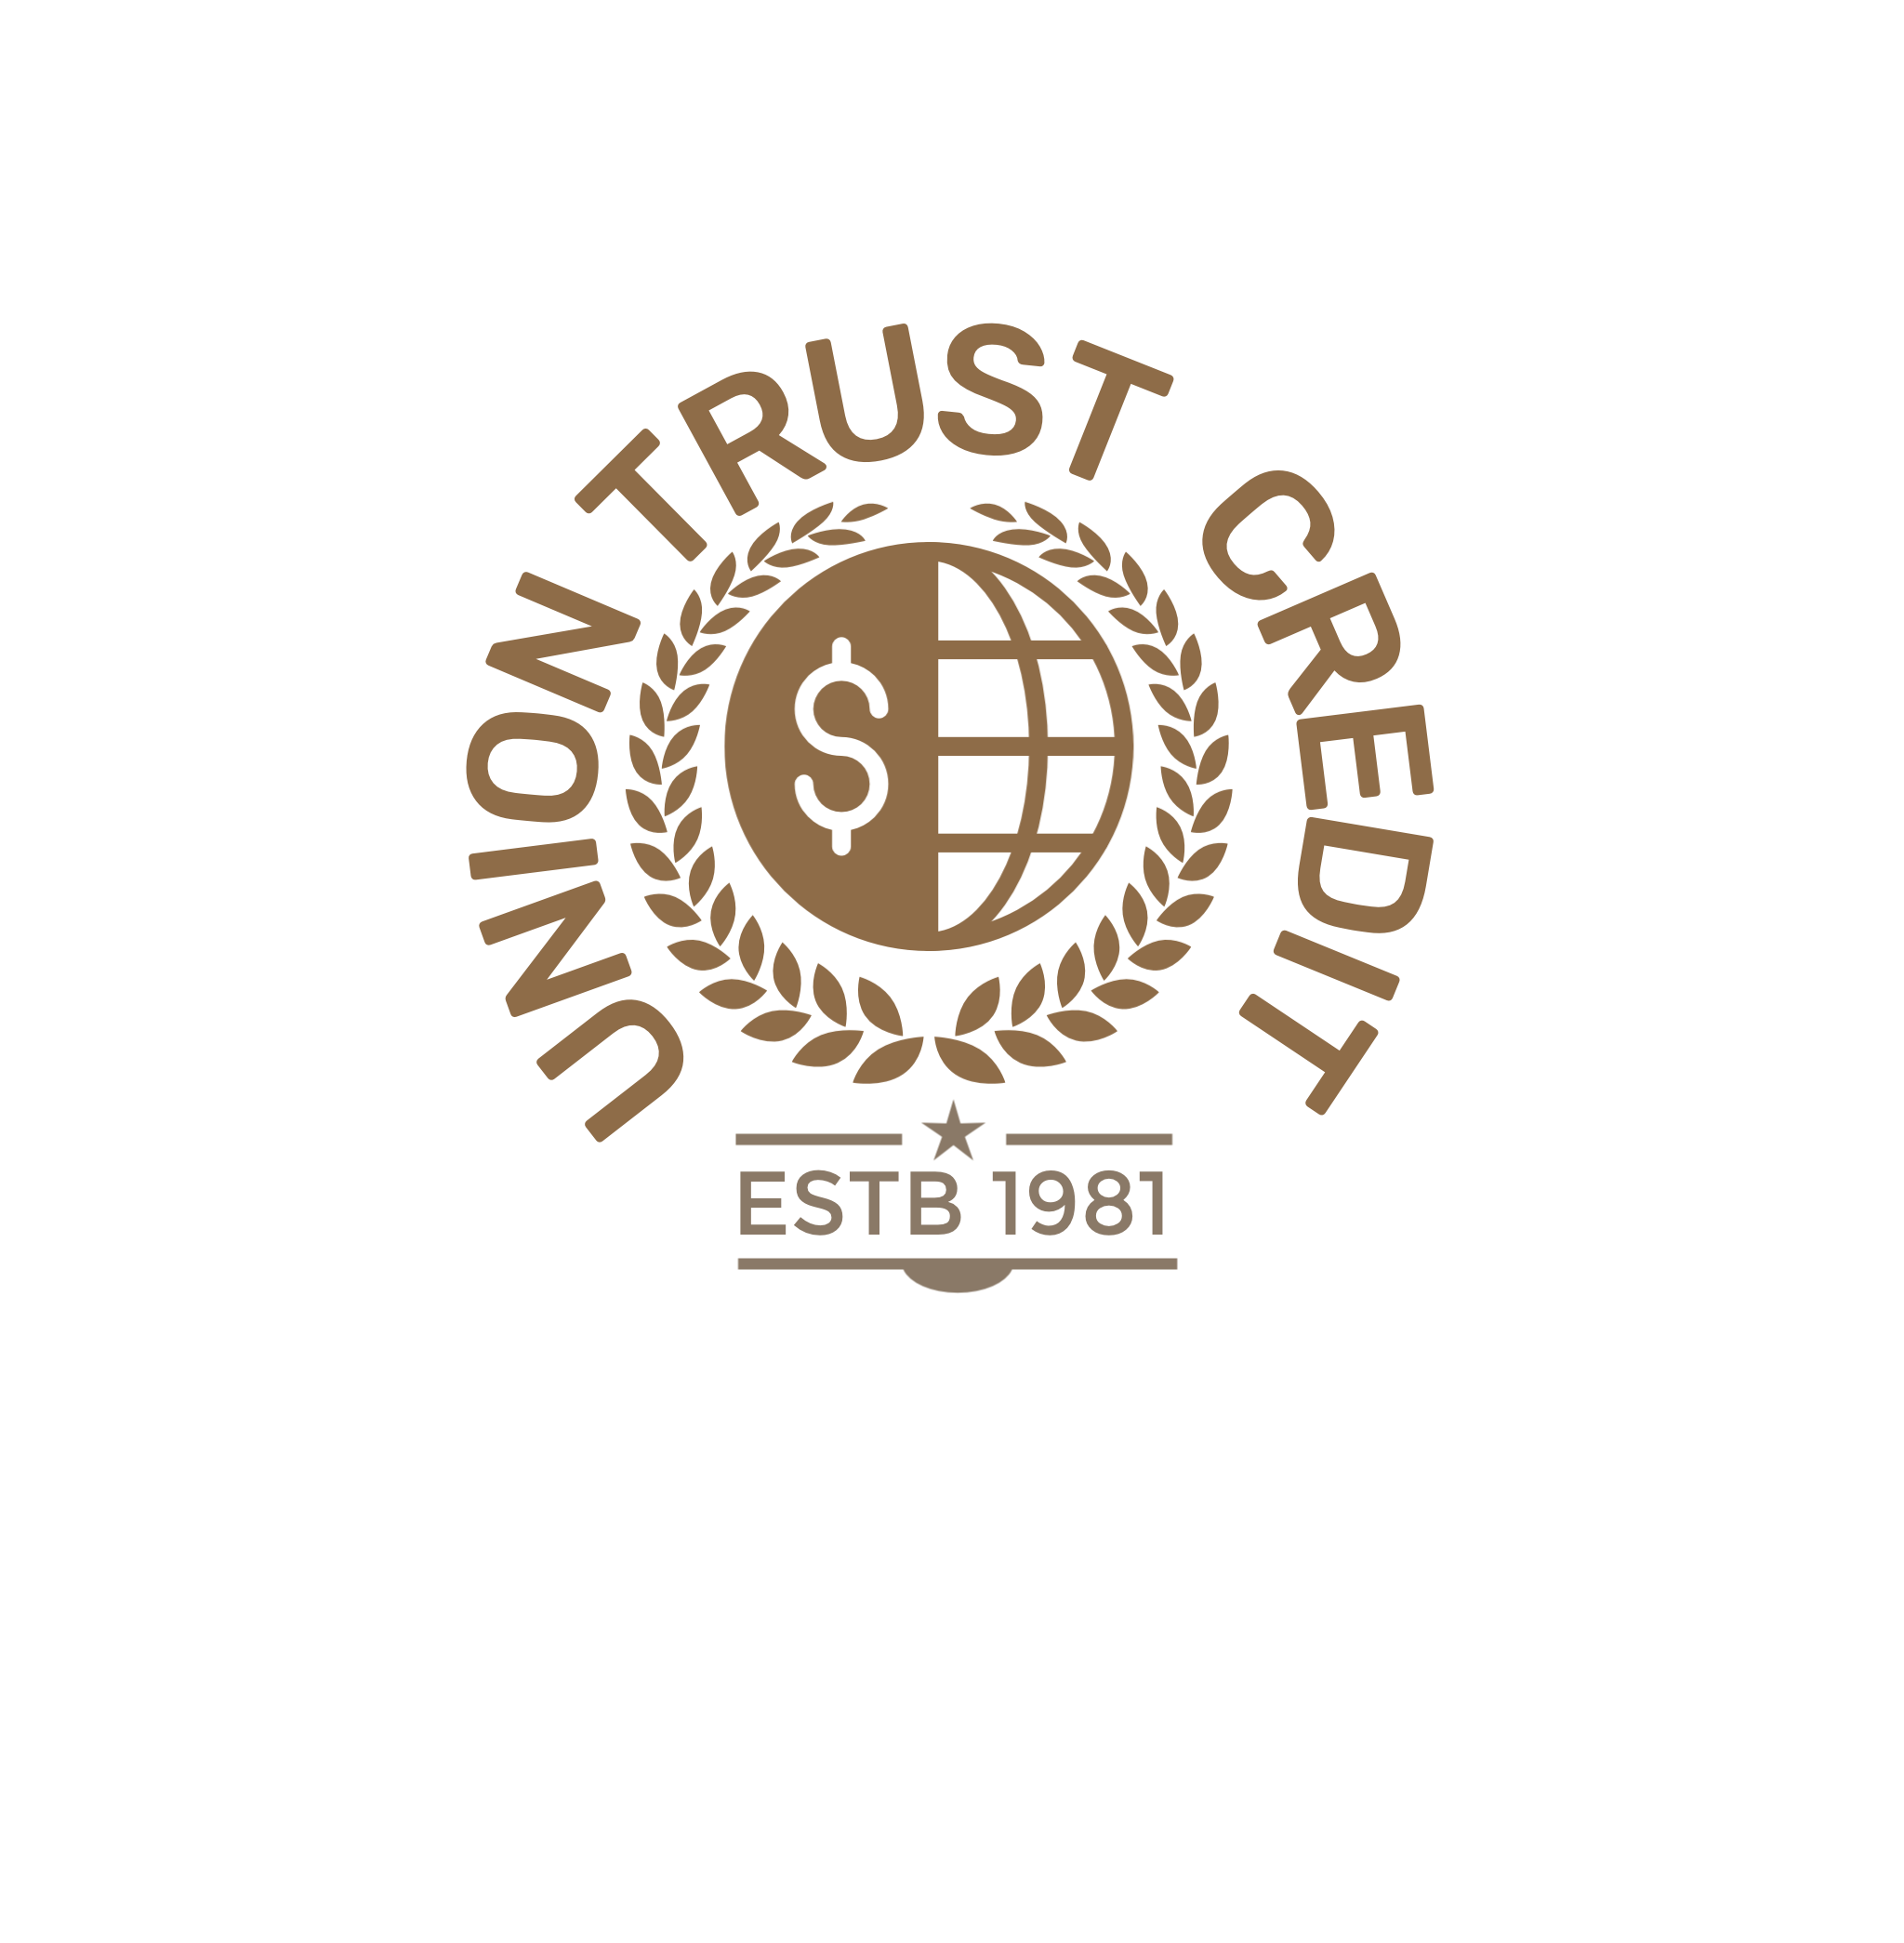 Union Trust Credit Bank